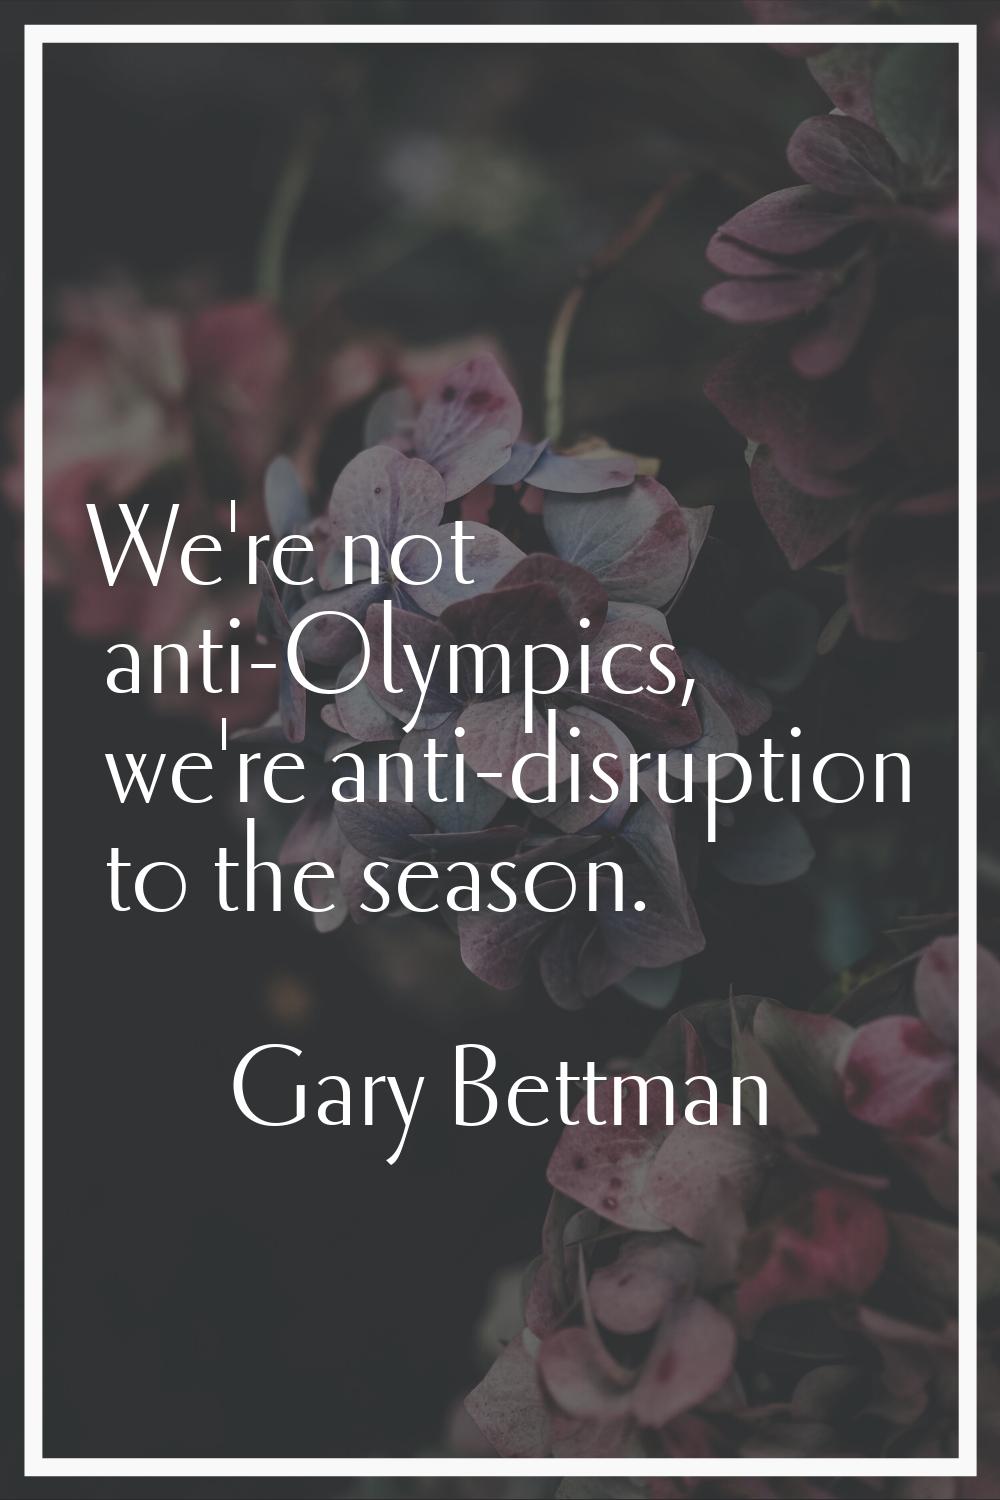 We're not anti-Olympics, we're anti-disruption to the season.